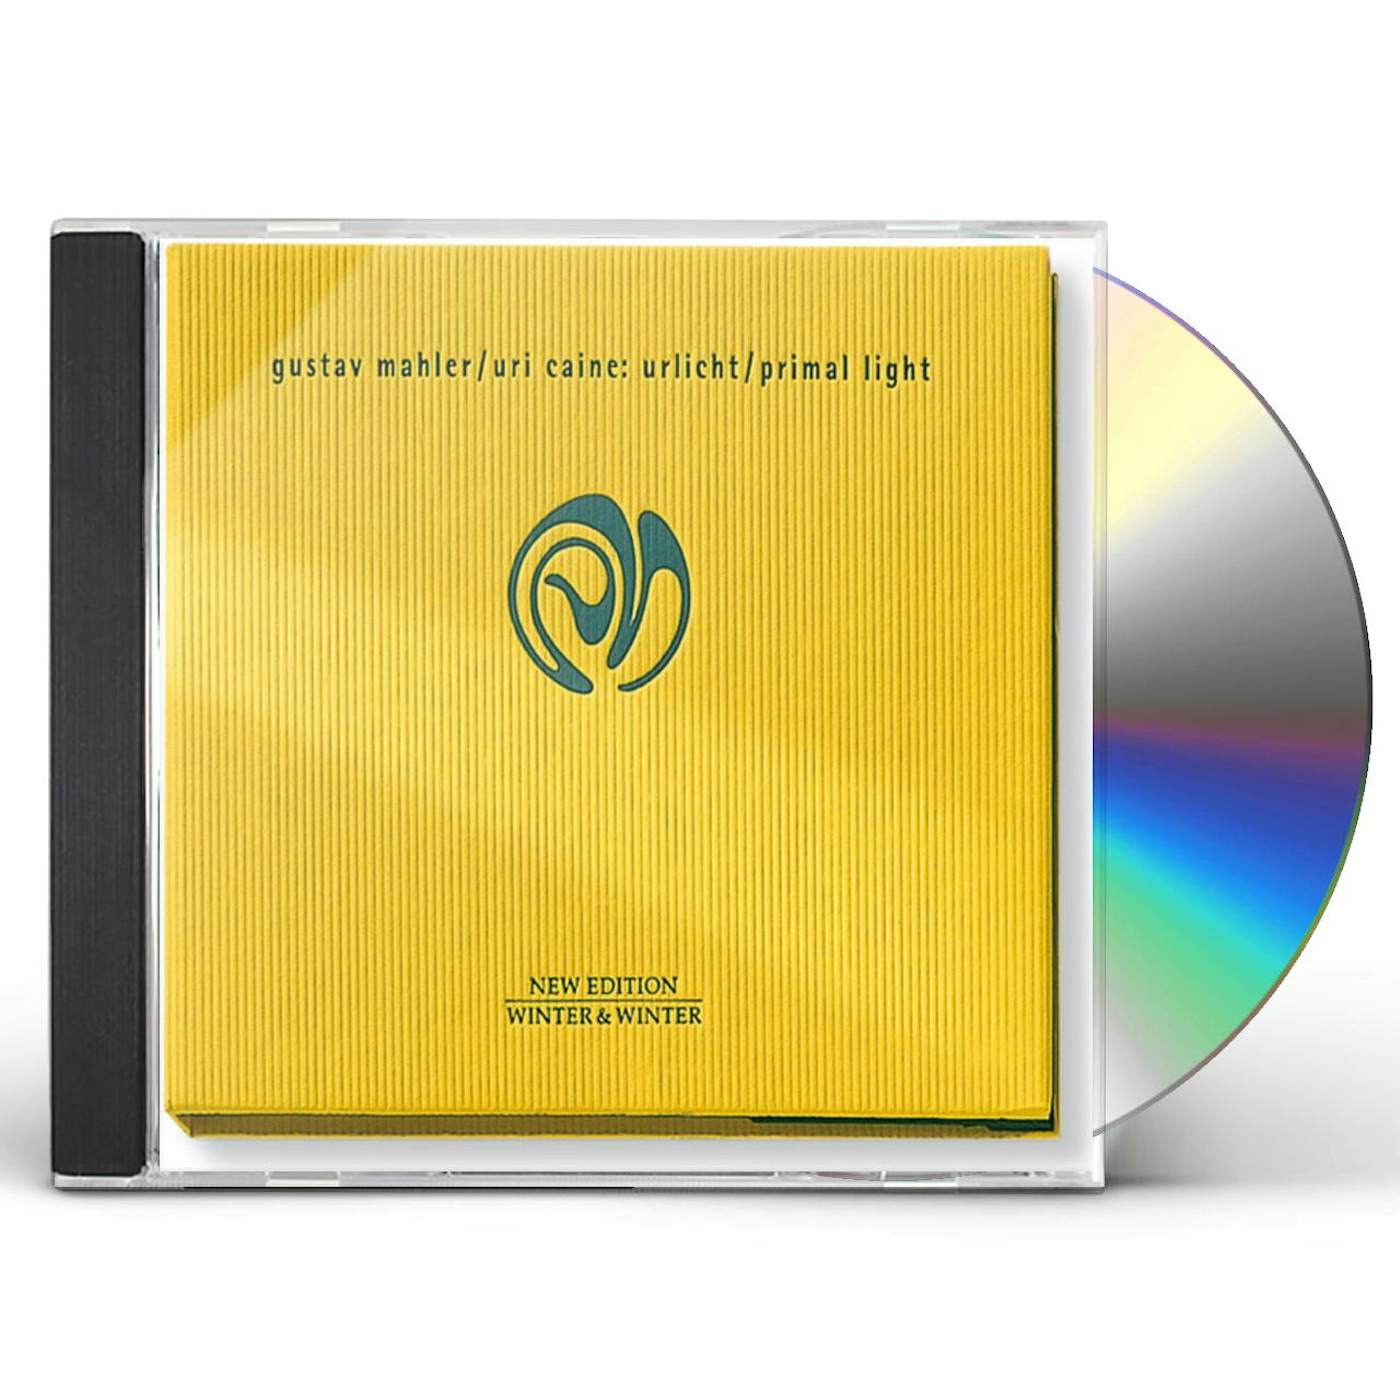 Uri Caine URLICHT / PRIMAL LIGHT CD